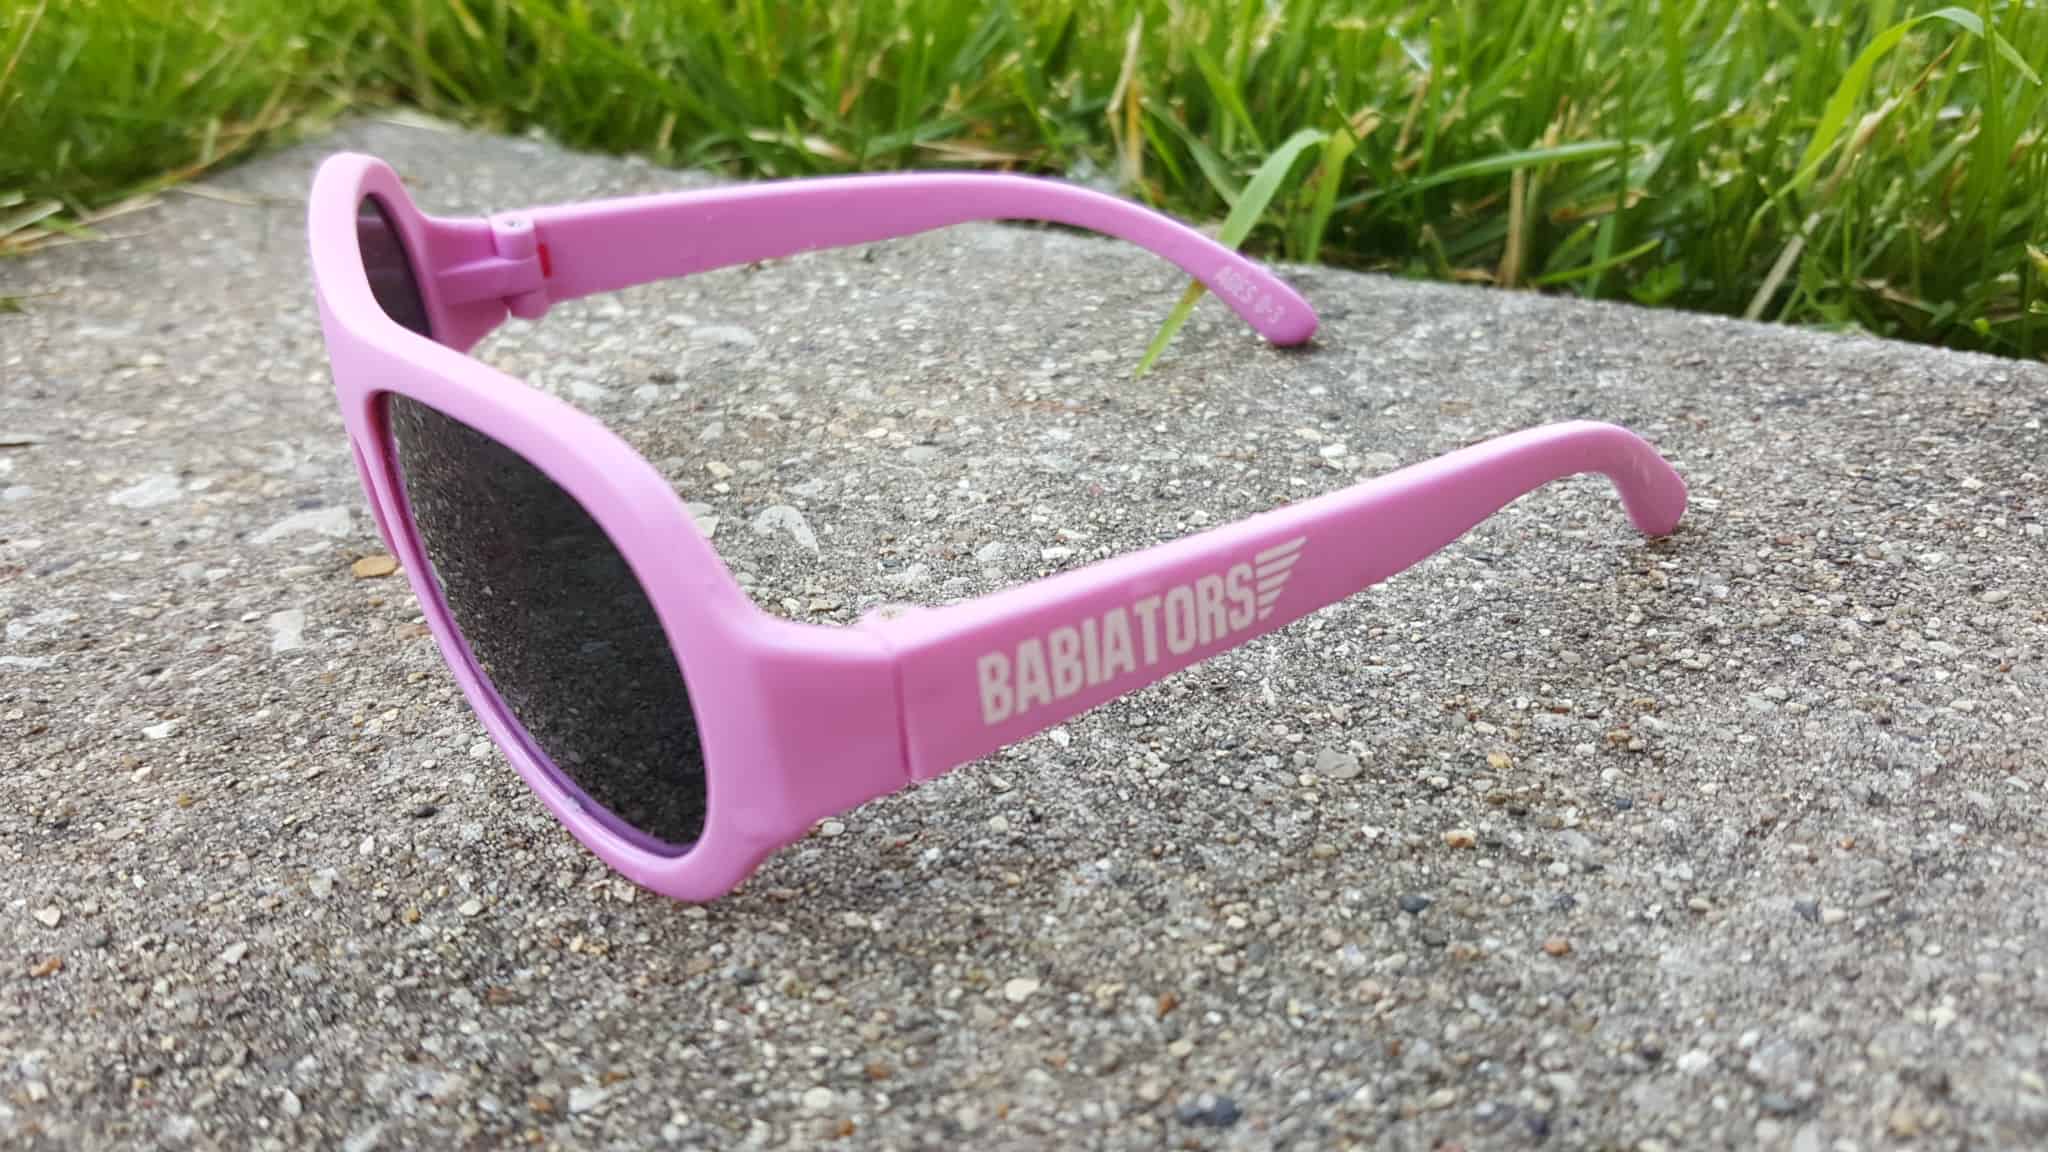 Babiators Sunglasses for Kids